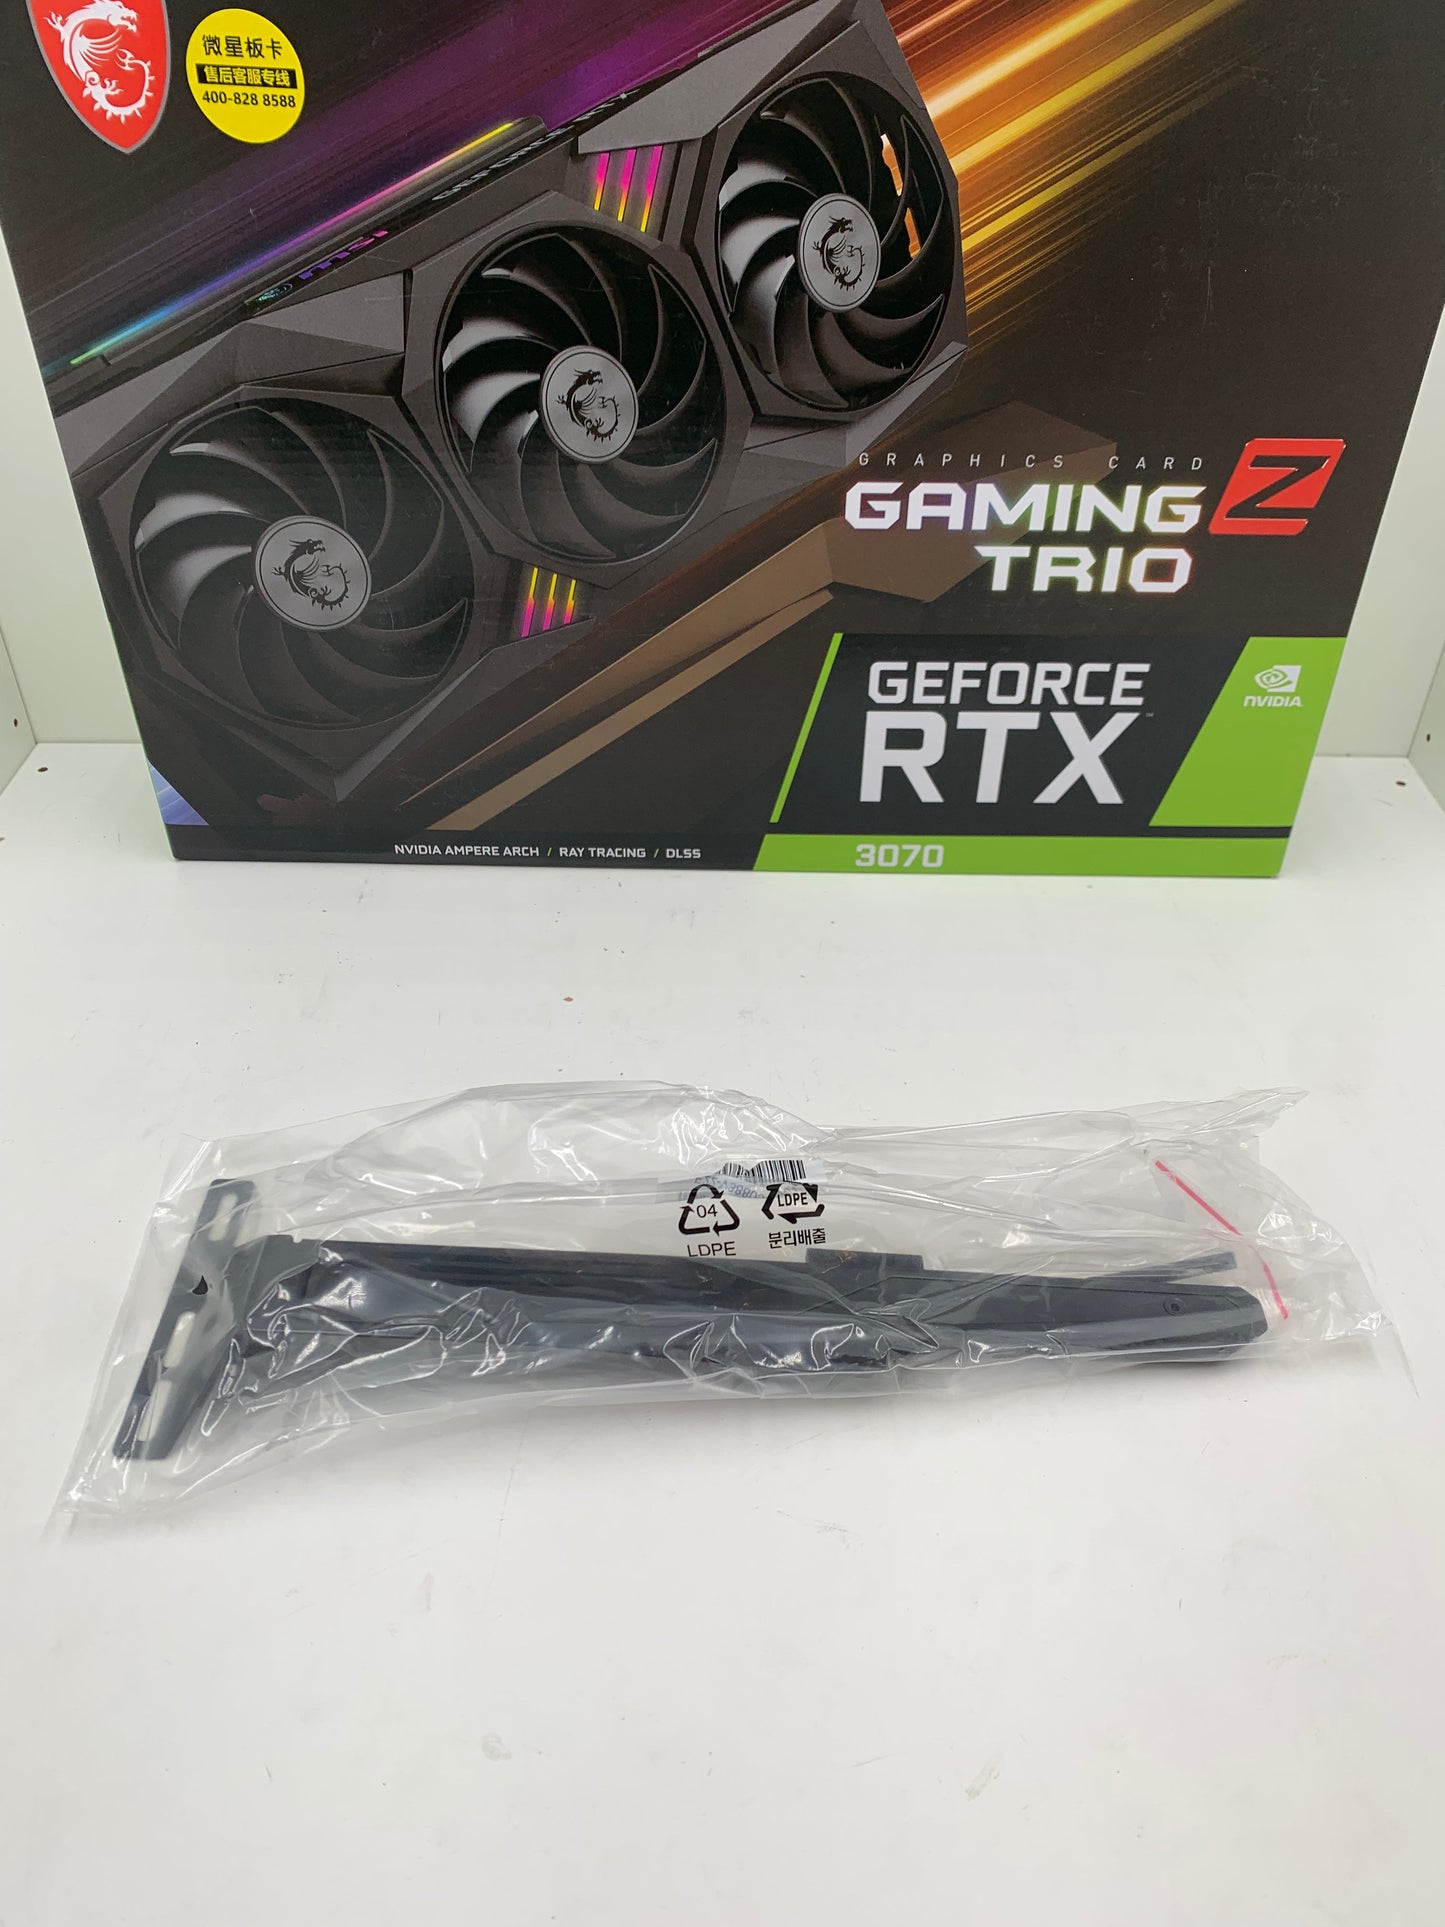 MSI Nvidia GeForce RTX 3070 Gaming X Trio 8GB GDDR6 - Was £309.99 - B